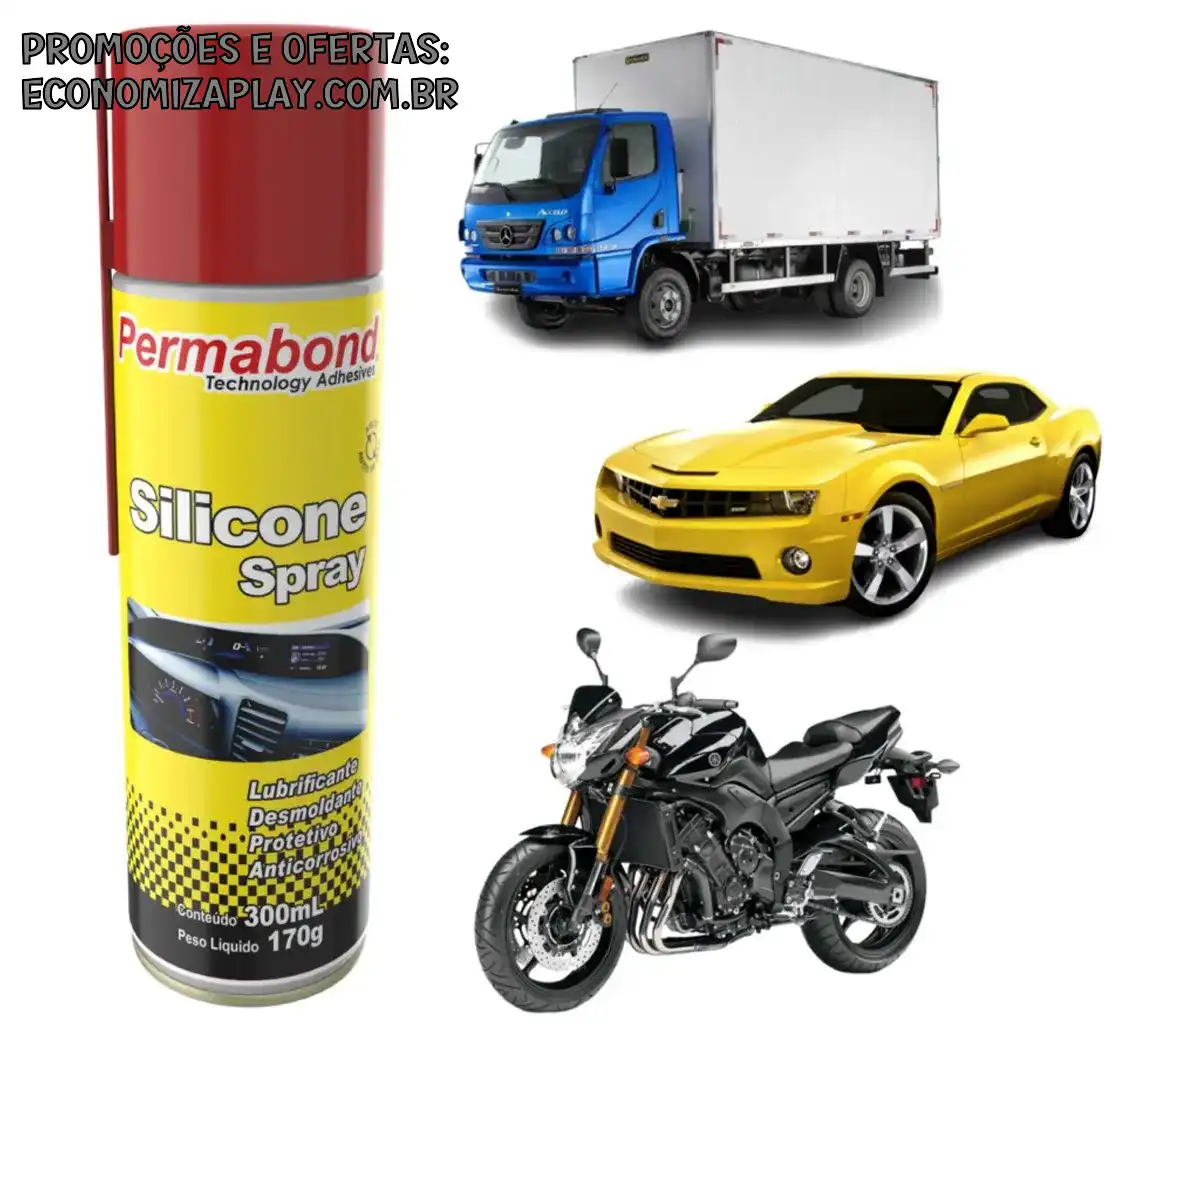 Silicone Spray 300ml TuttiFrutti Painel Banco Borracha Carro Moto Caminhão Conservação Limpeza e Brilho